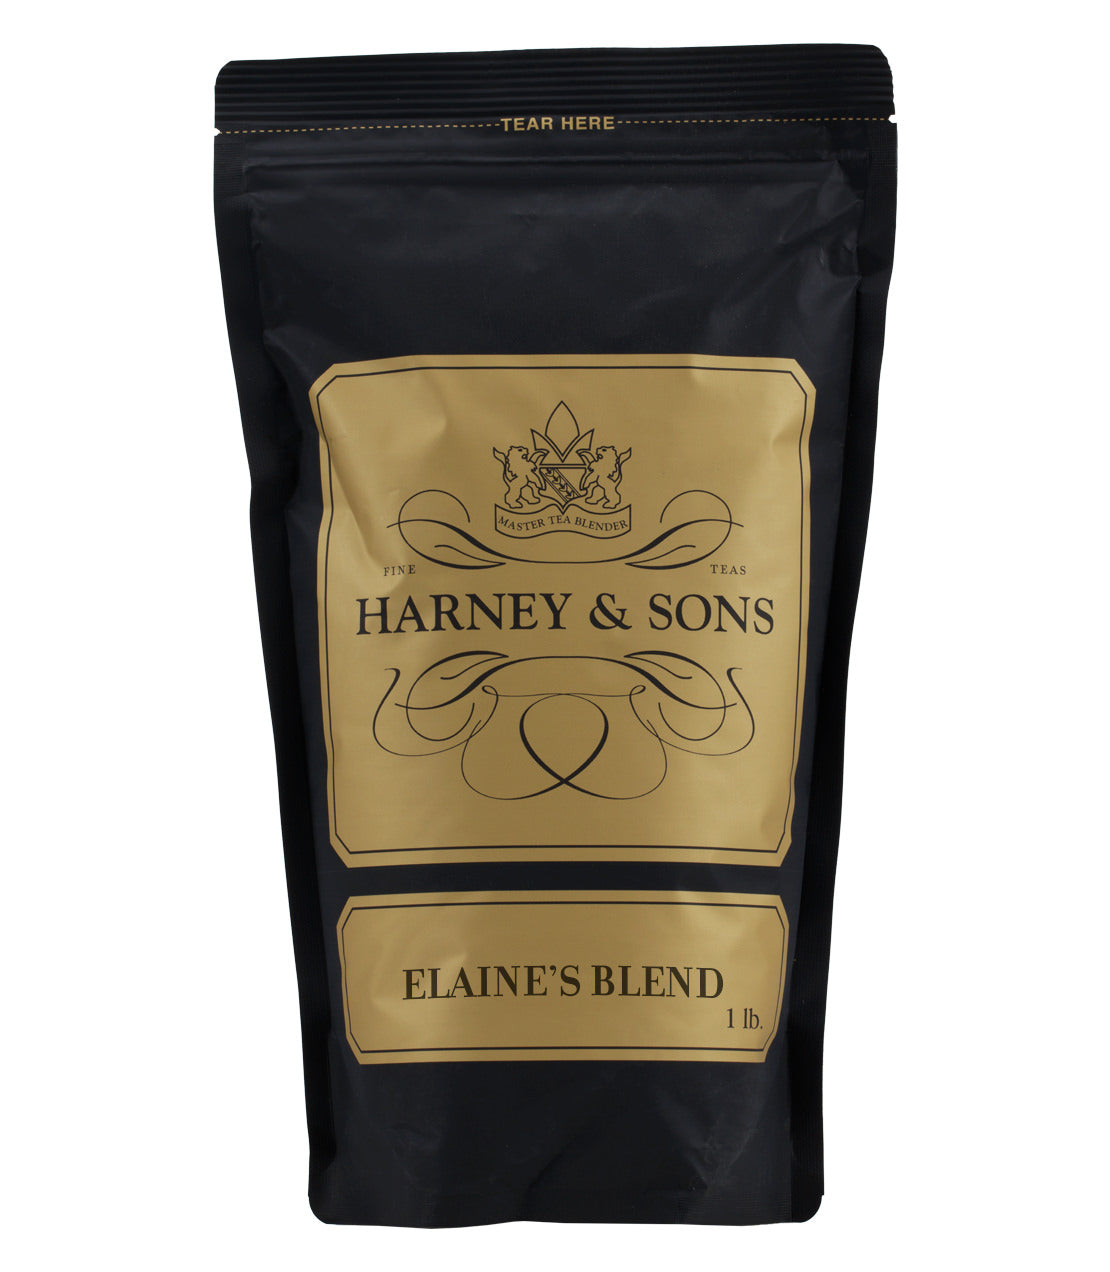 Elaine's Blend - Loose 1 lb. Bag - Harney & Sons Fine Teas